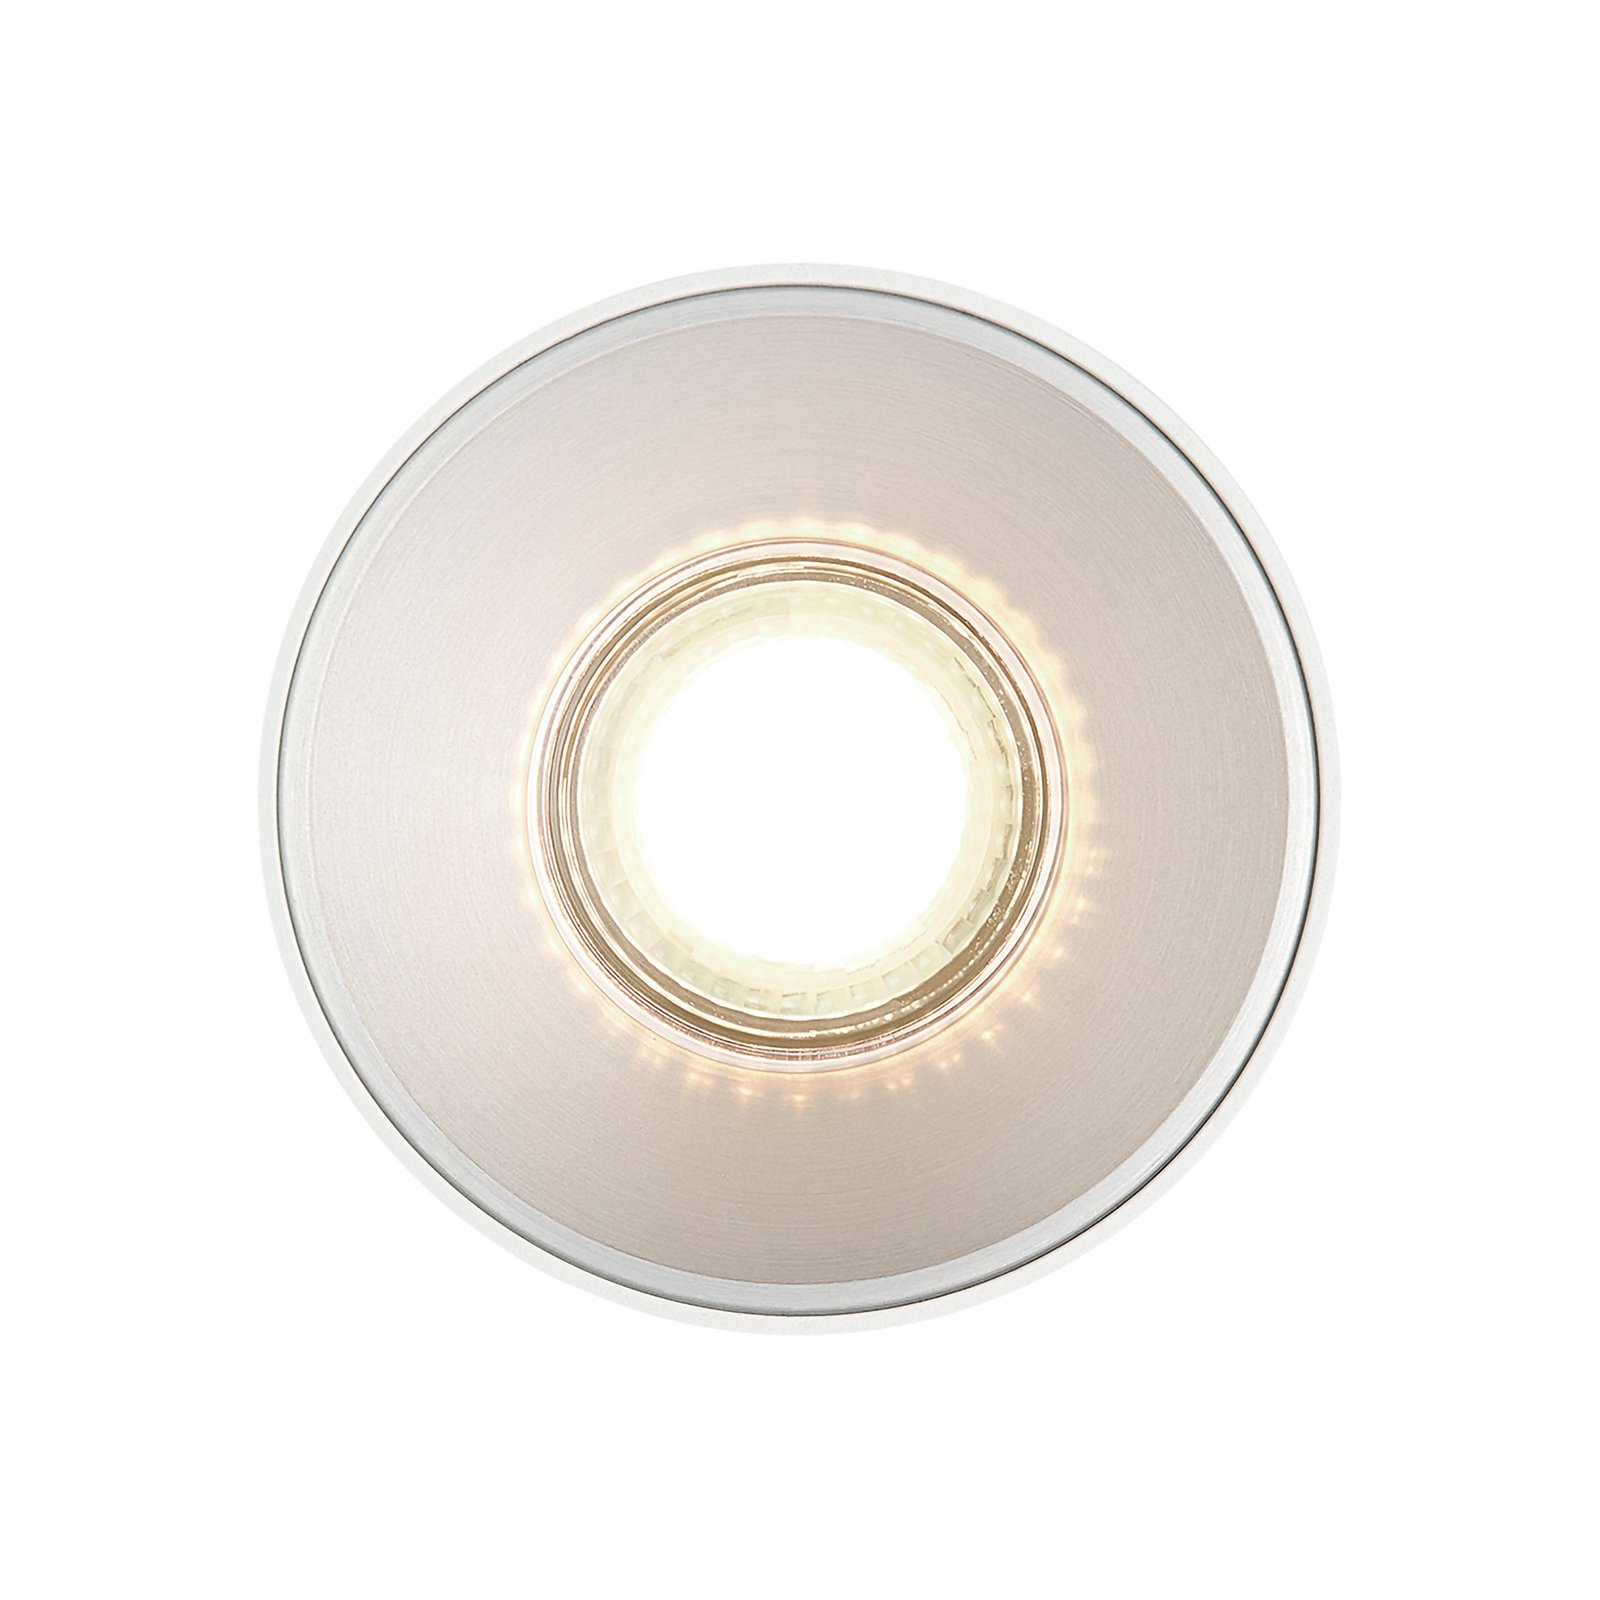 Svetilka Downlight Pitcher, GU10, z enojnim plamenom, kovinska, bela